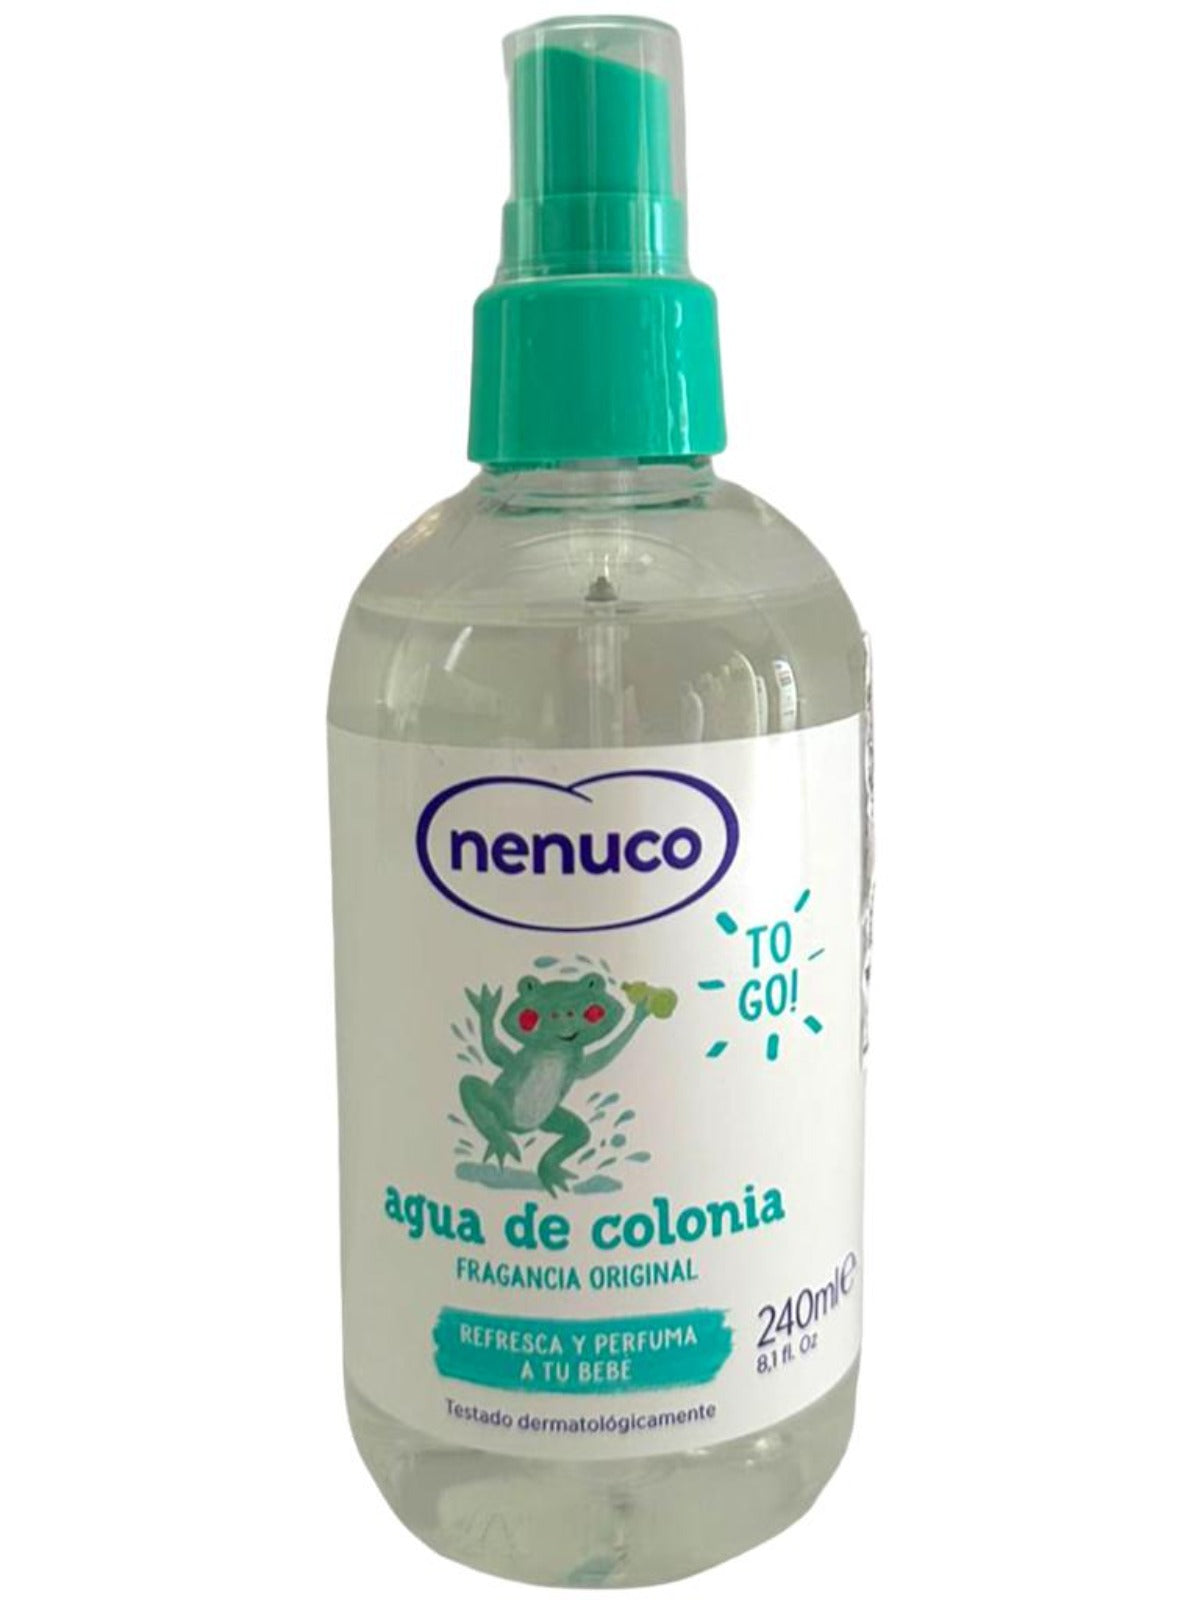 Nenuco Spanish Baby Cologne Spray 240ml